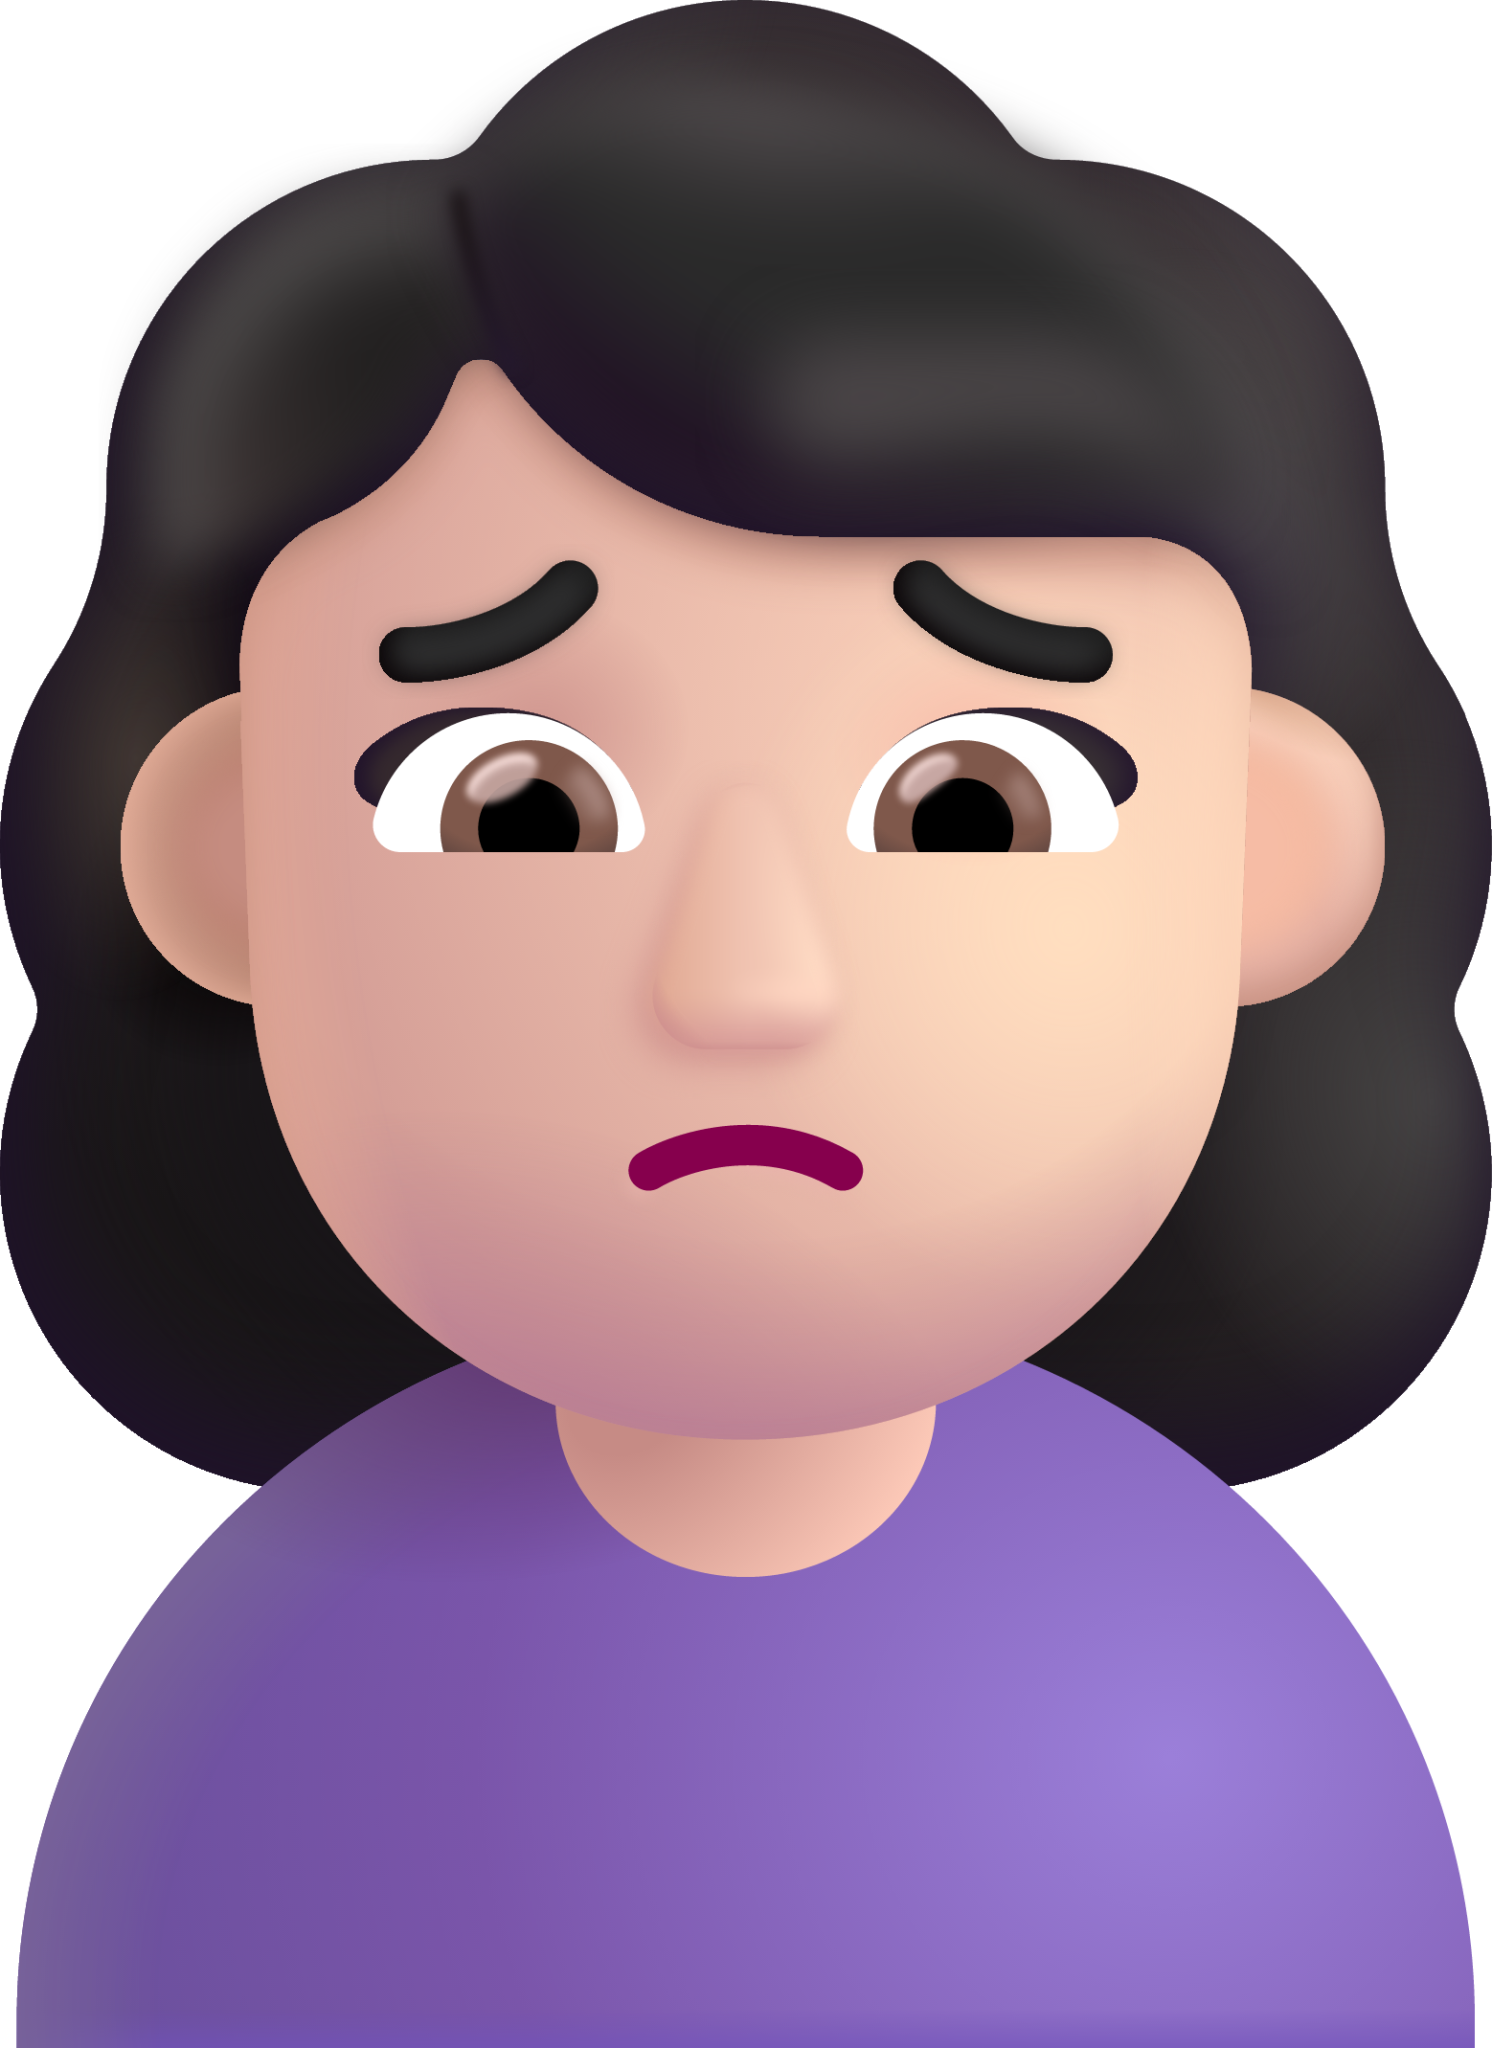 woman frowning light emoji